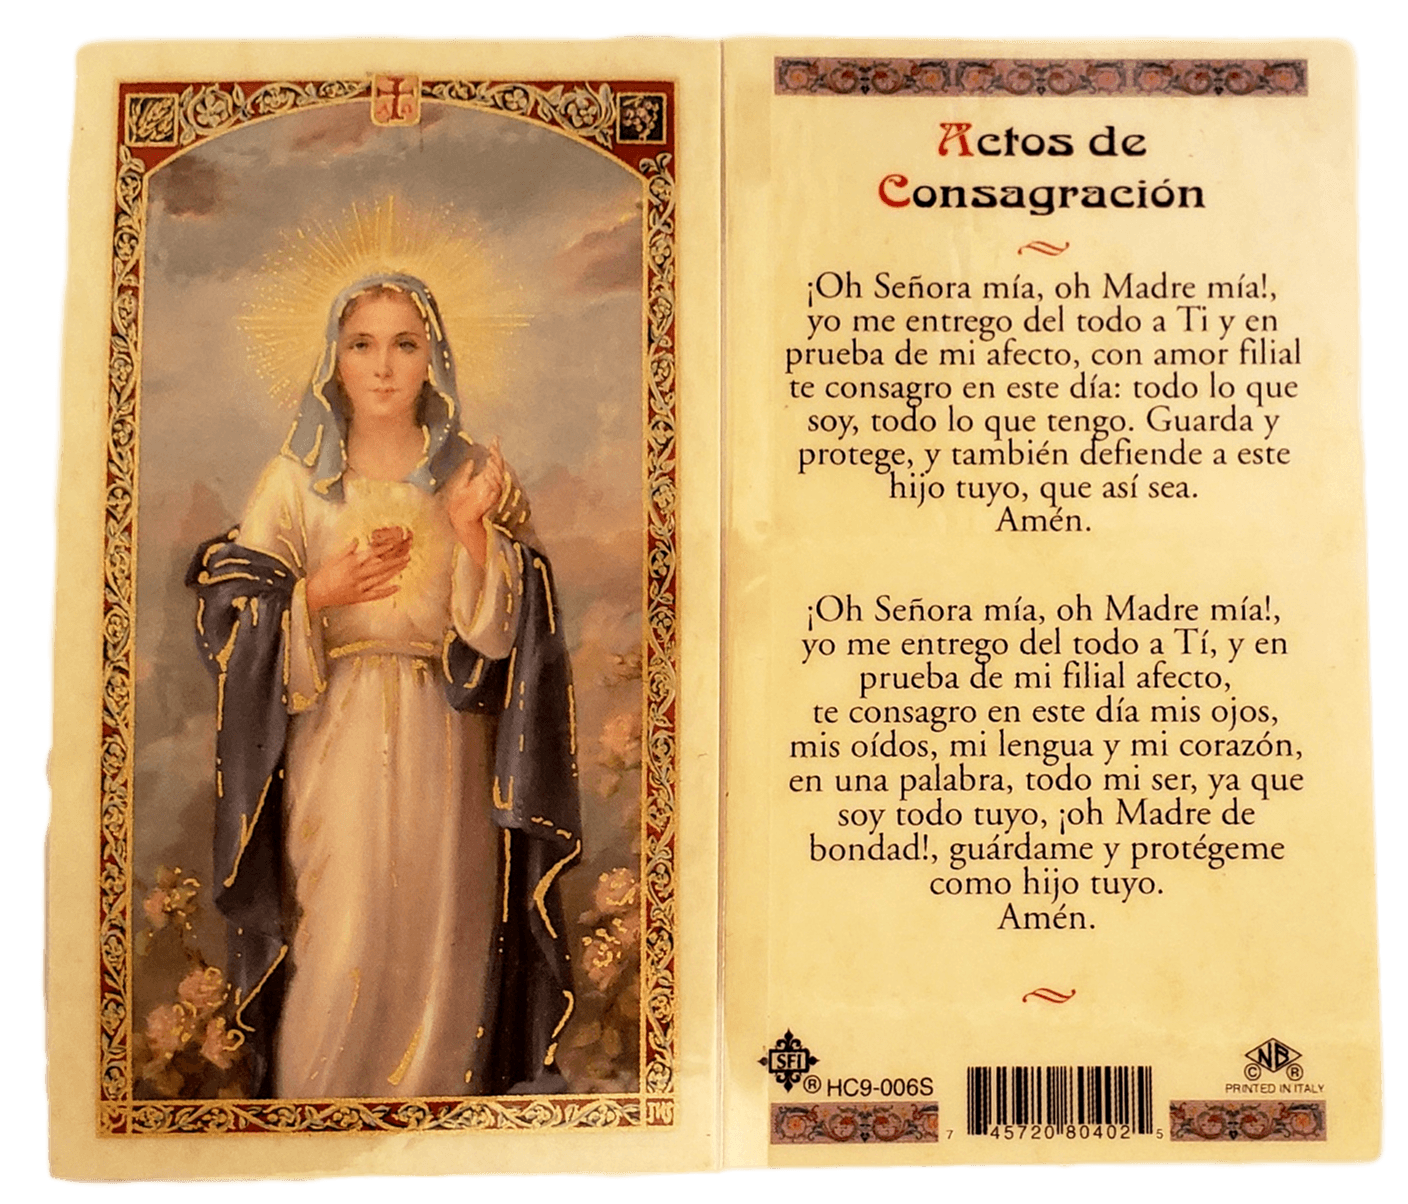 Prayer Card Actos De Consagracion SPANISH Laminated HC9-006S - Ysleta Mission Gift Shop- VOTED El Paso's Best Gift Shop